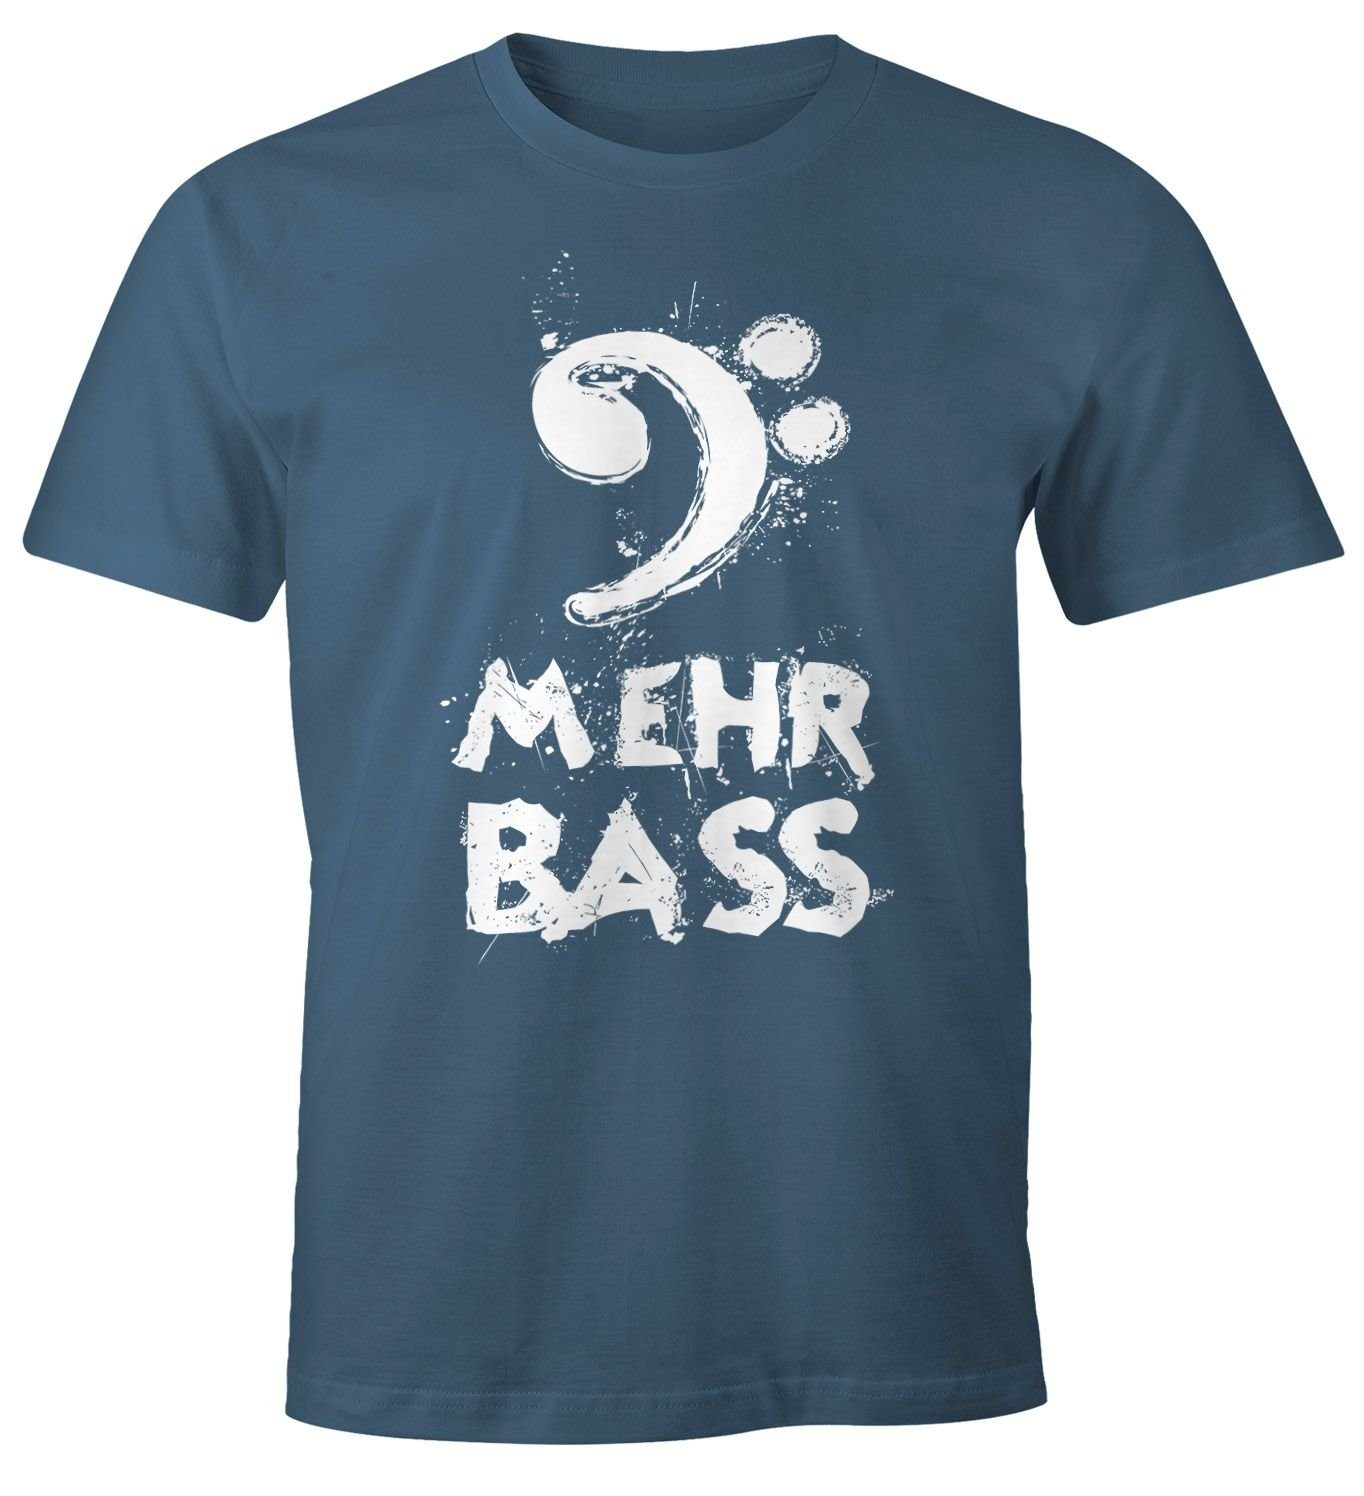 MoonWorks Print-Shirt Herren T-Shirt Mehr Bass Musik Party Moonworks® mit Print blau